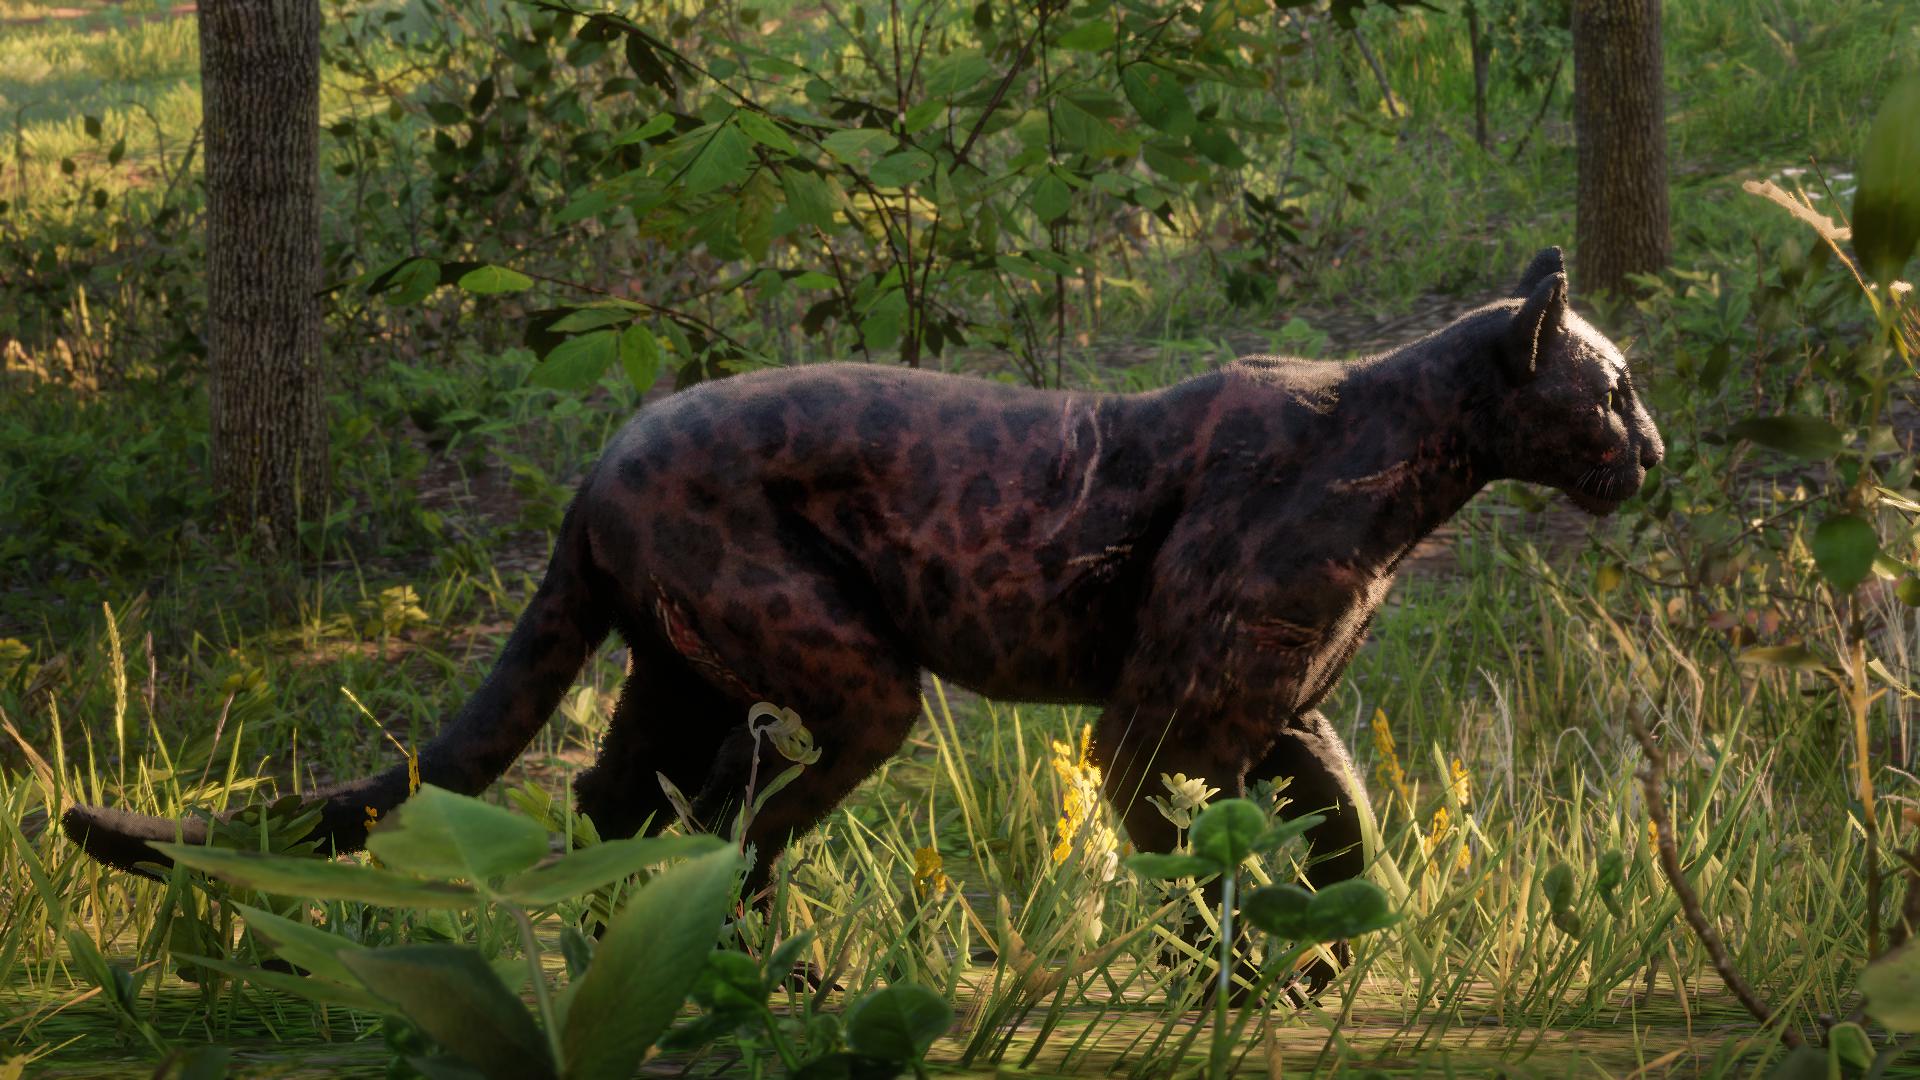 SLATZ_7 Twitter: "Legendary Giaguaro Panther #RockstarGames https://t.co/qGx6B9ddNB" /